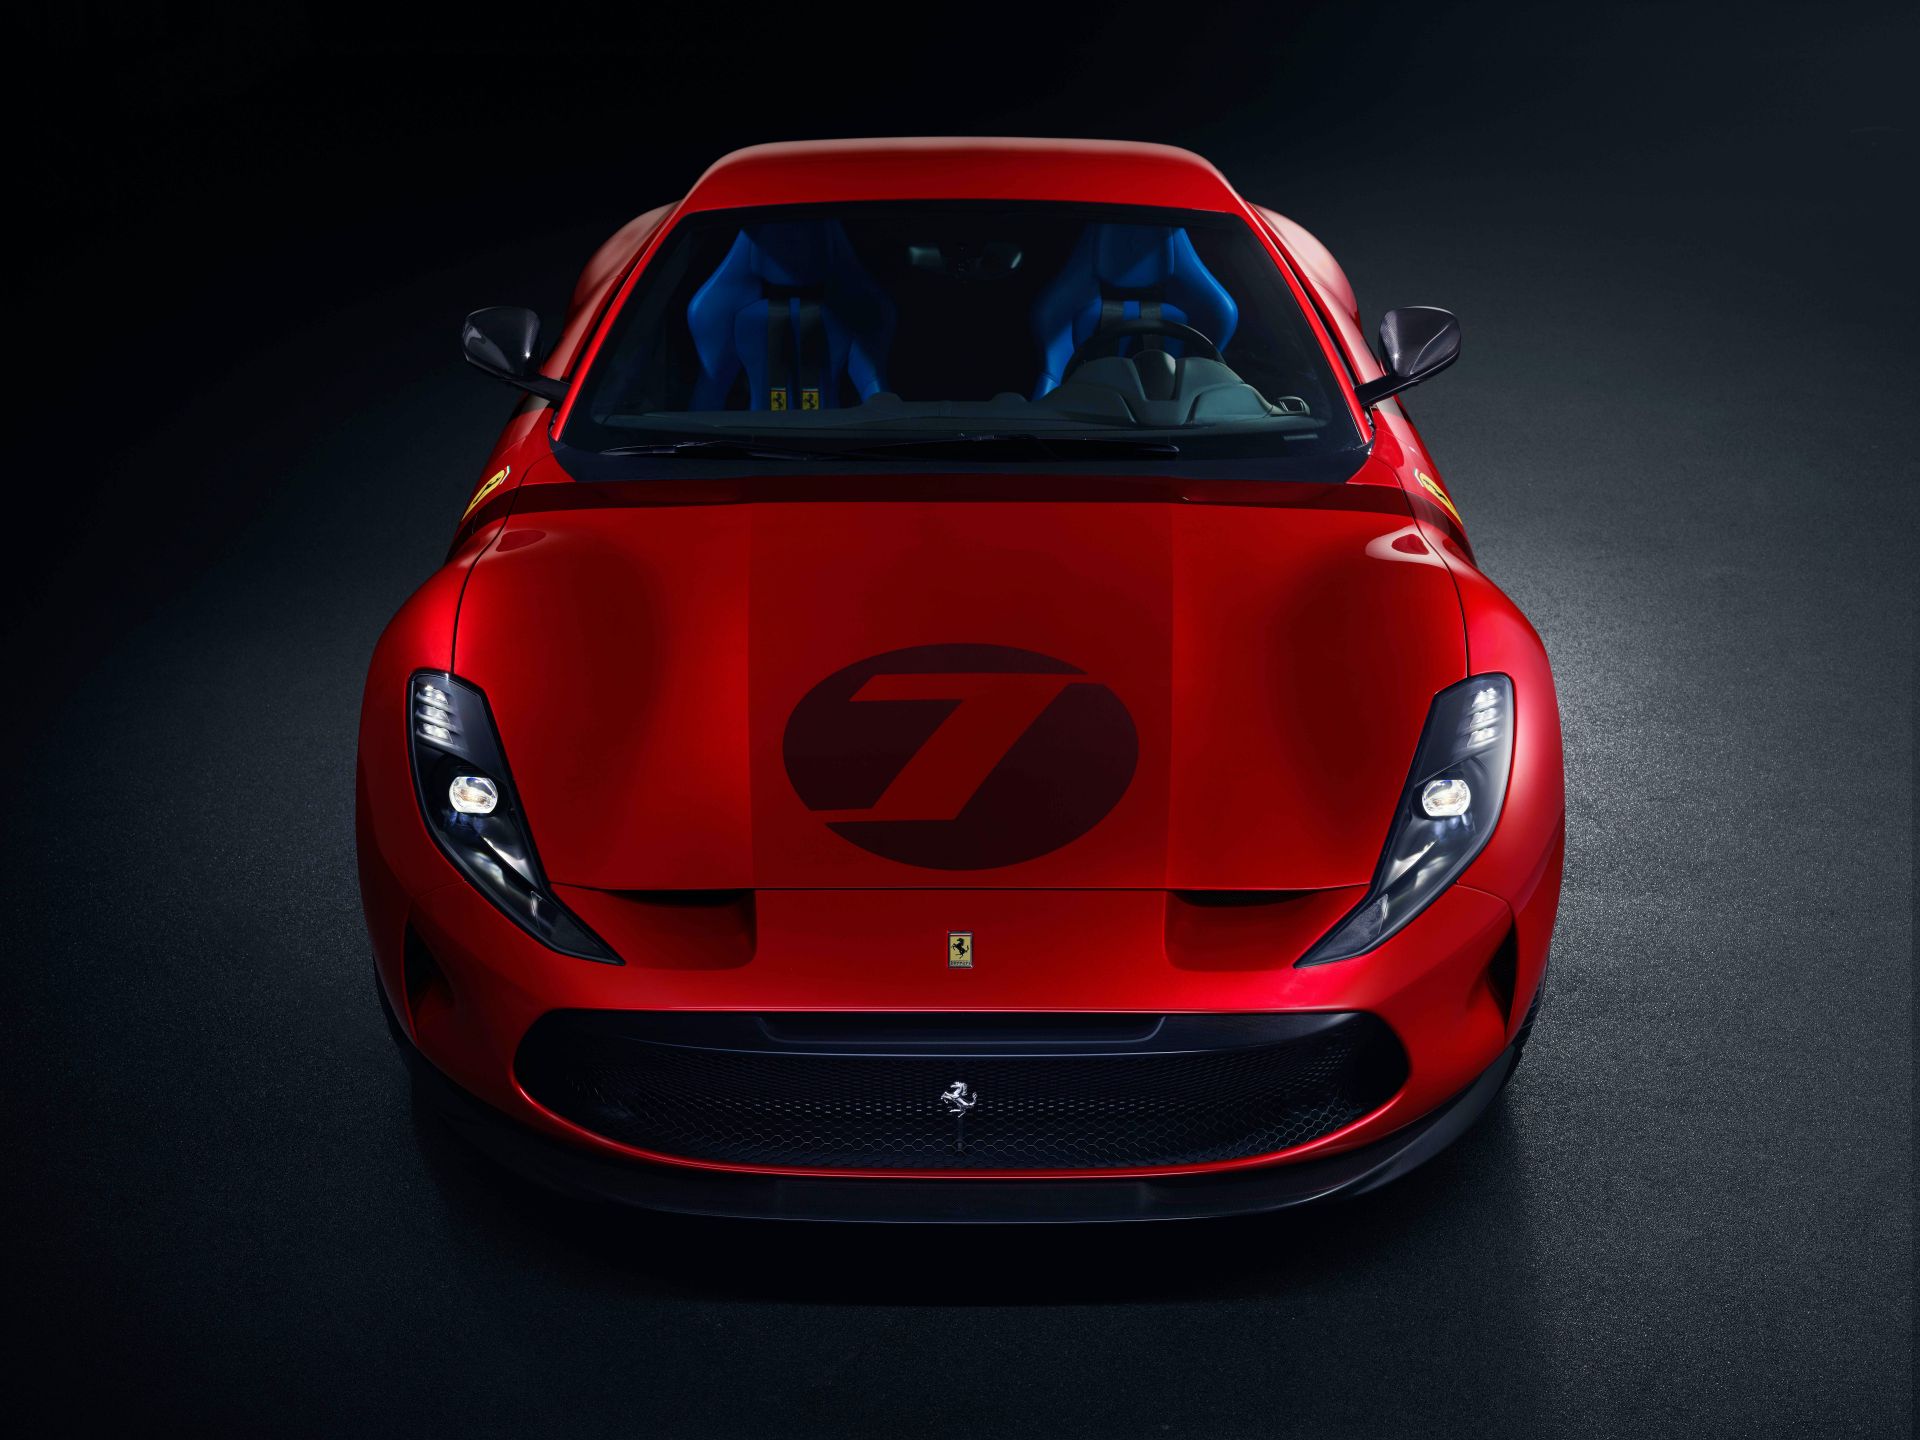 Ferrari Omologata (2020): One-Off Creation Based On The 812 Superfast